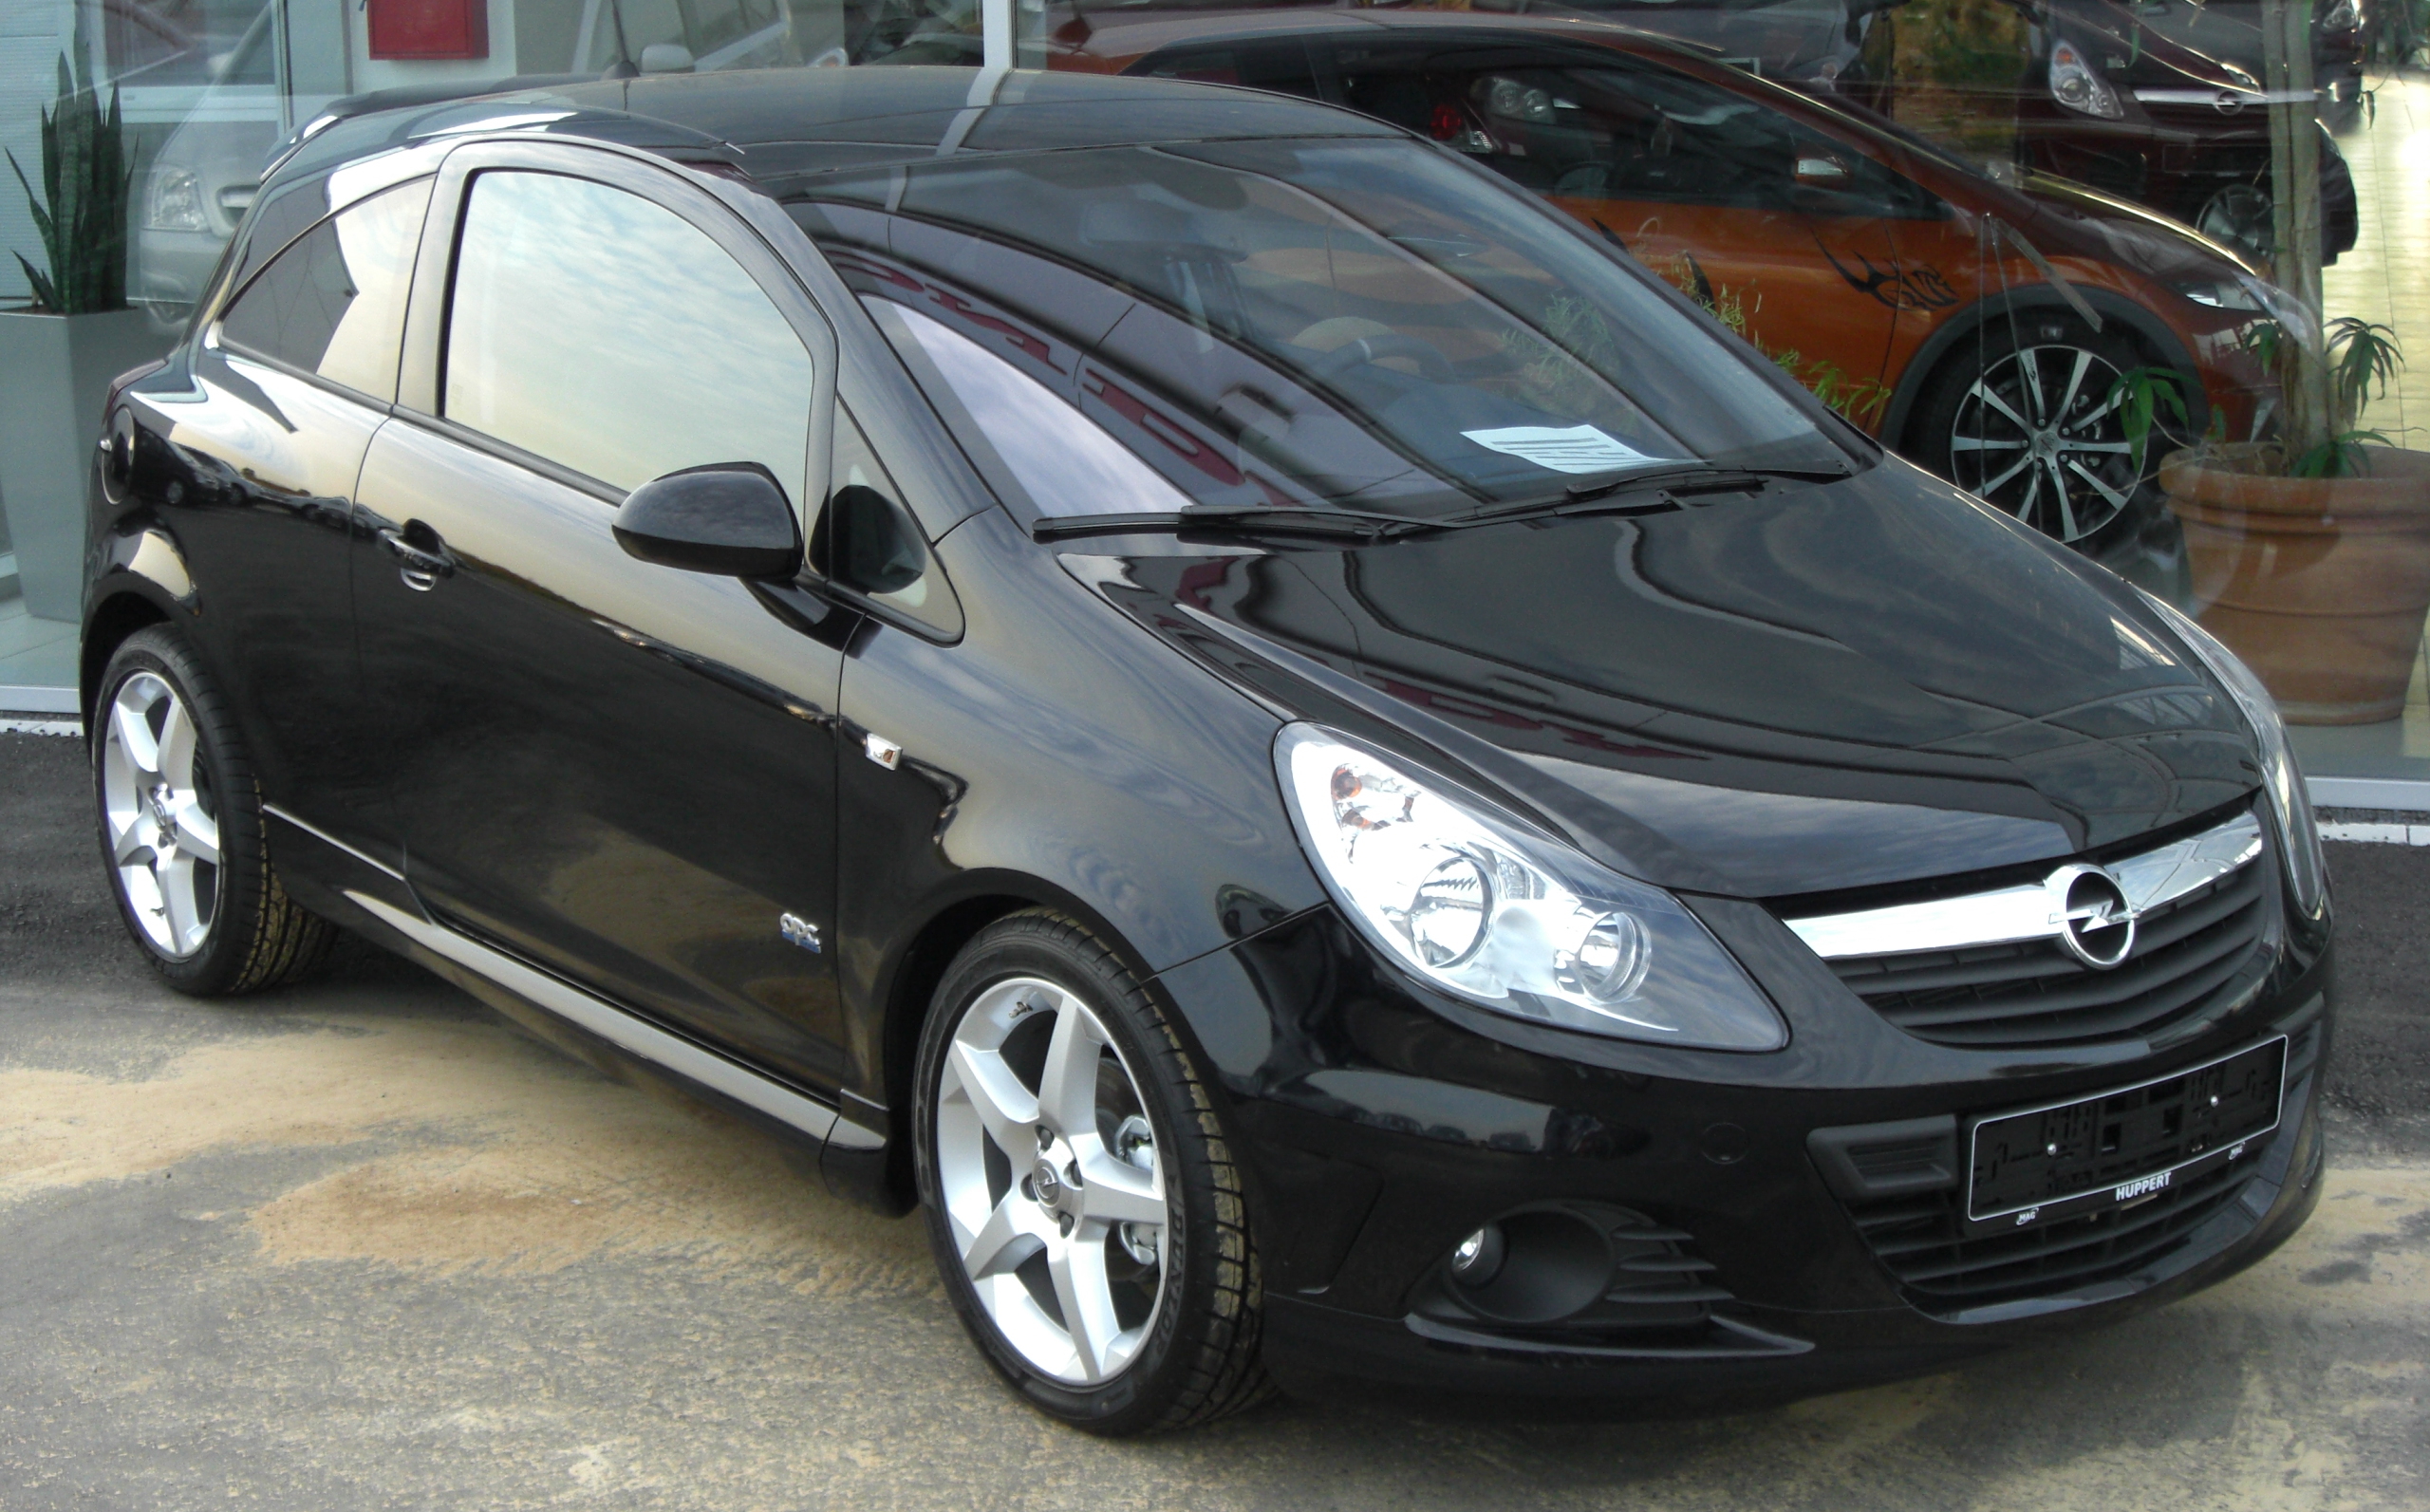 File:Opel Corsa D front.jpg - Wikimedia Commons